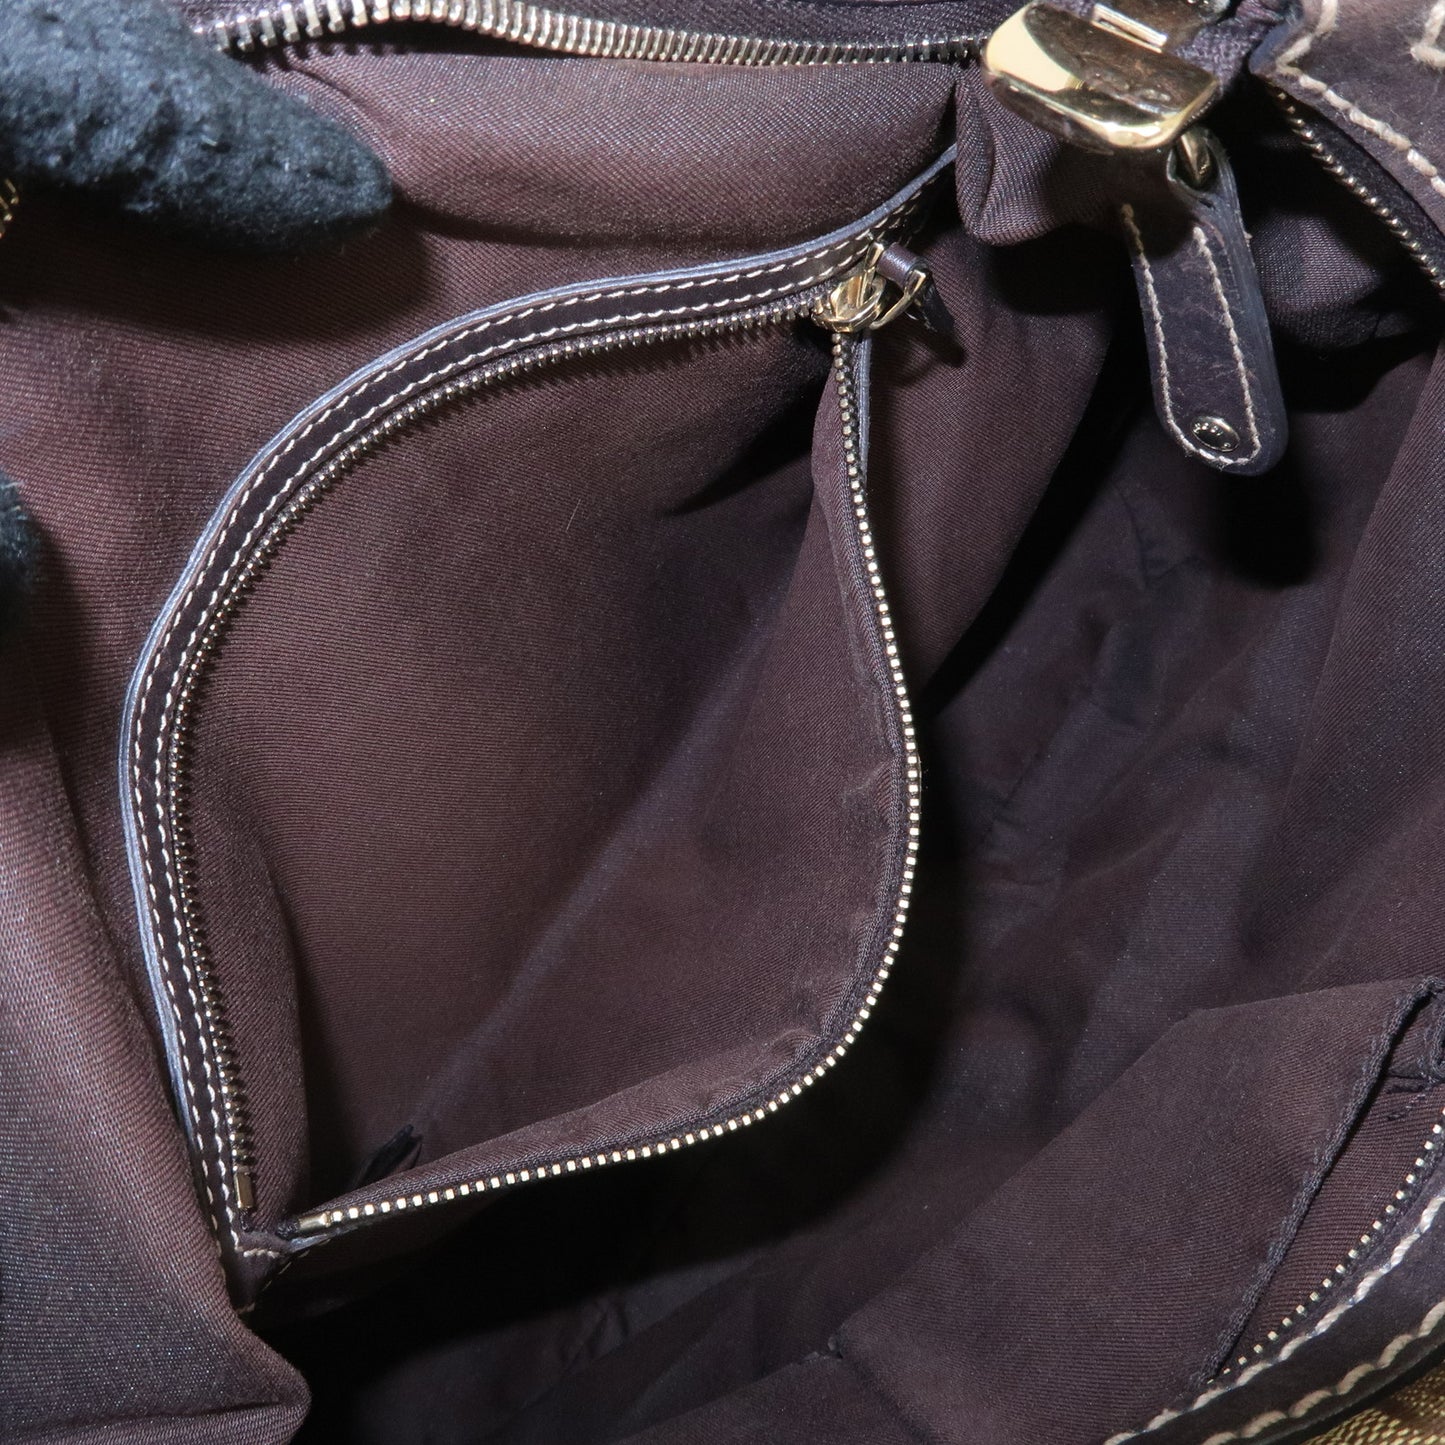 GUCCI GG Crystal Leather GG Supreme One Shoulder Bag 223965